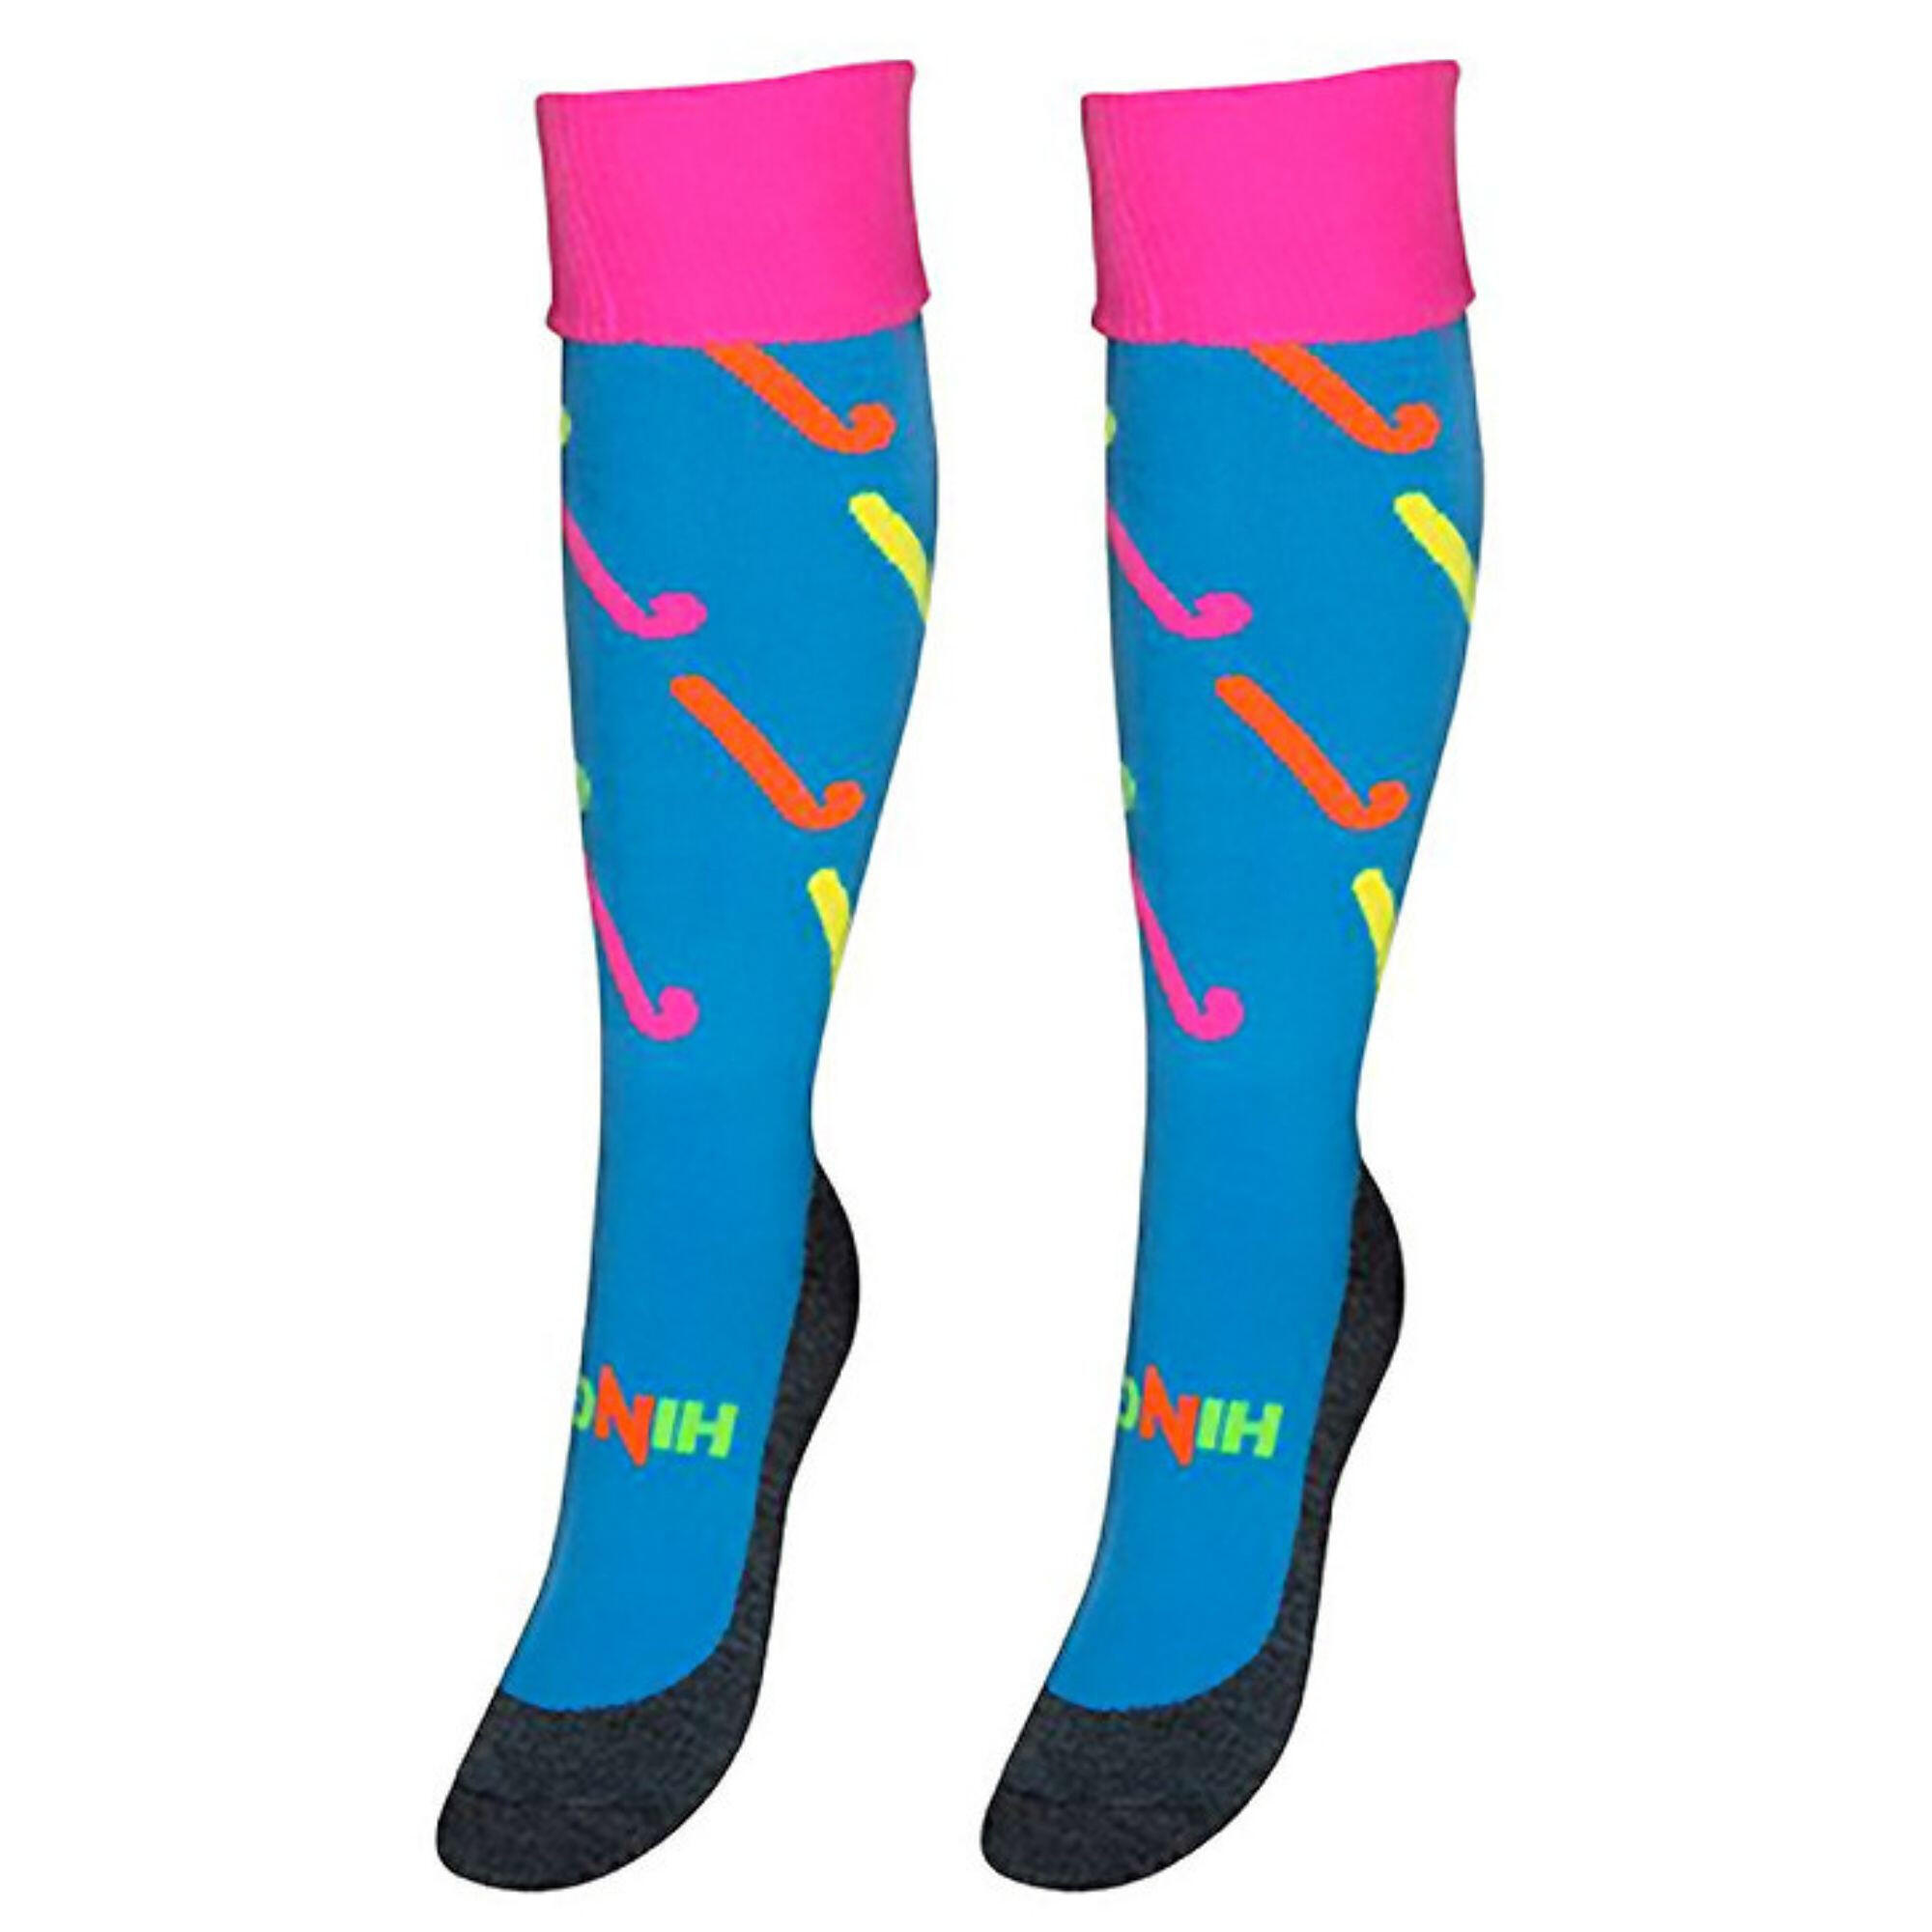 Knee High Hockey Socks with Hockey Stick Designs | Kids Sizes 3/4